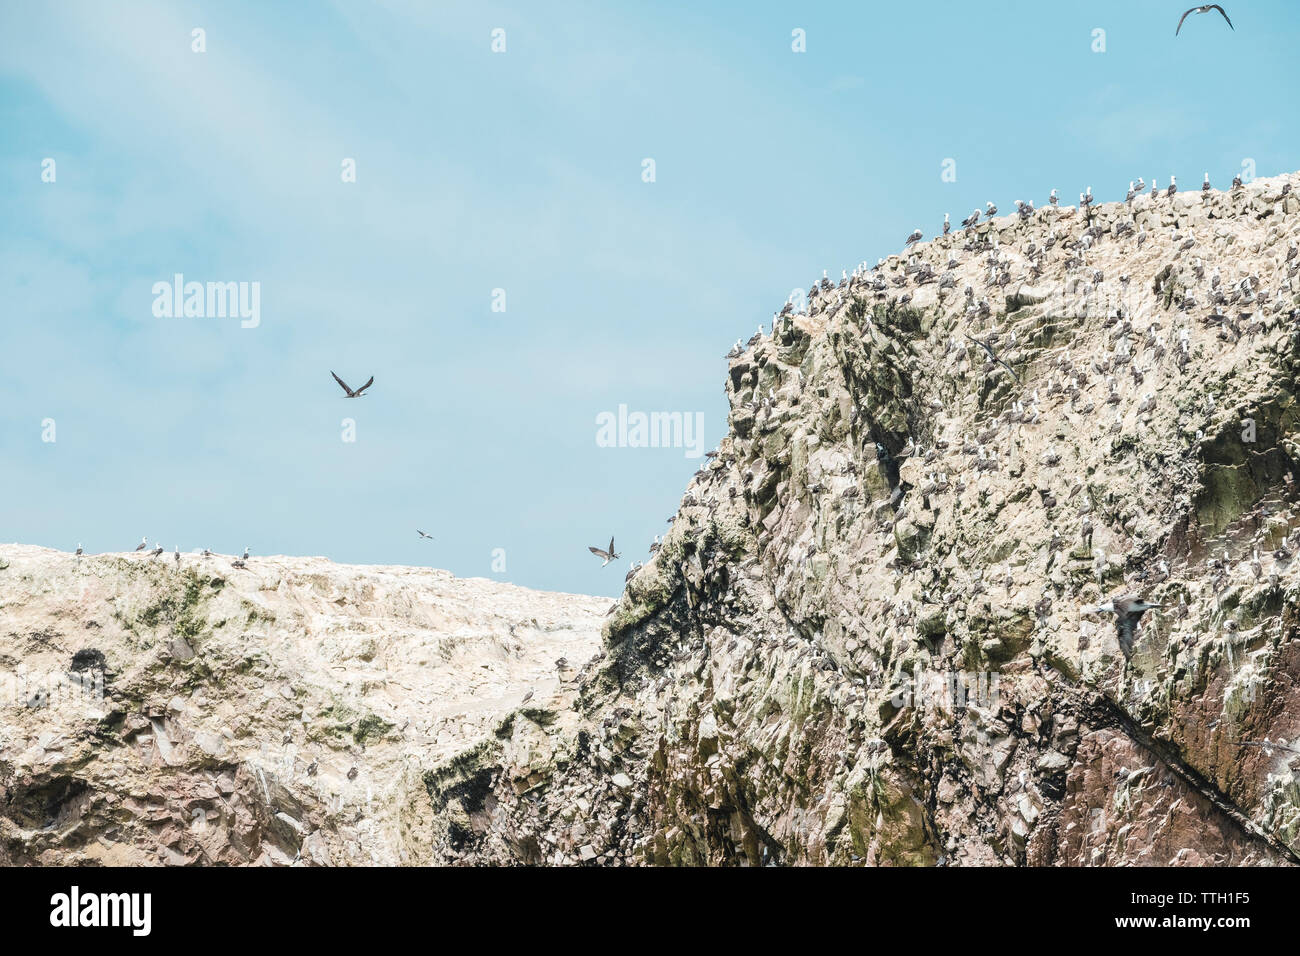 Birds on guano covered rocks, Islas Ballestas, Paracas,Peru Stock Photo